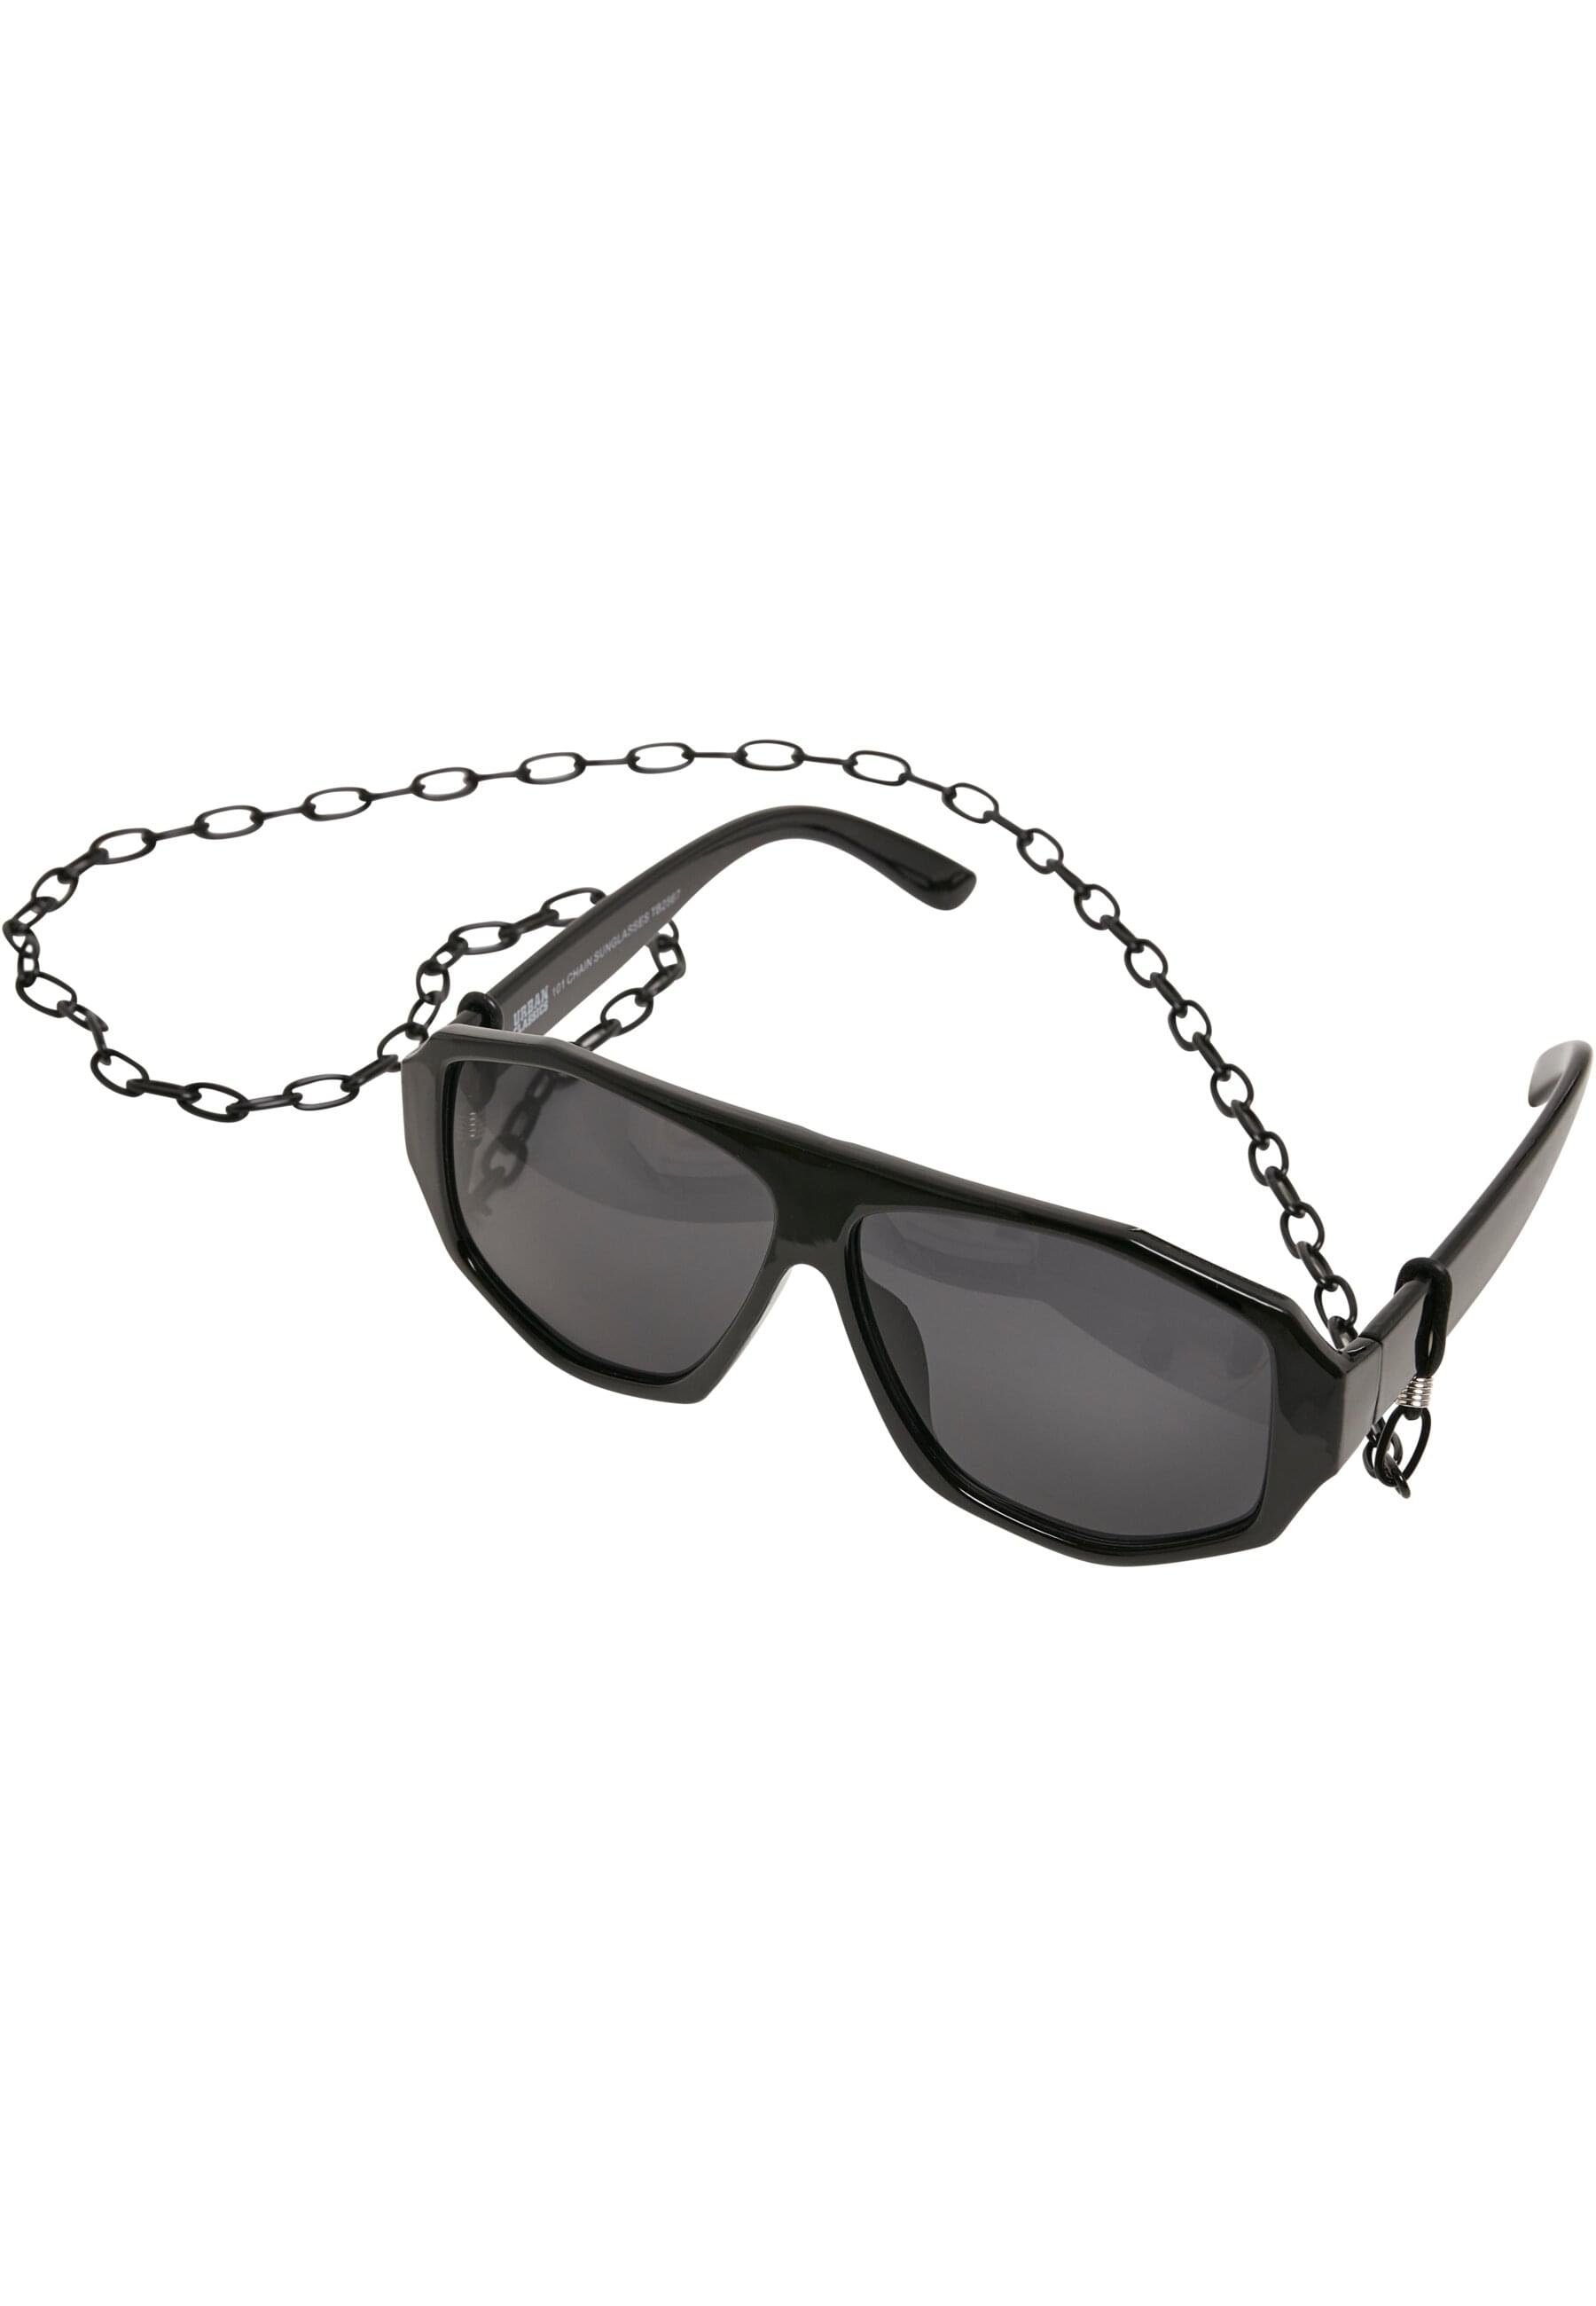 TB2567 Chain Chain black/black URBAN 101 Unisex Sonnenbrille Sunglasses CLASSICS 101